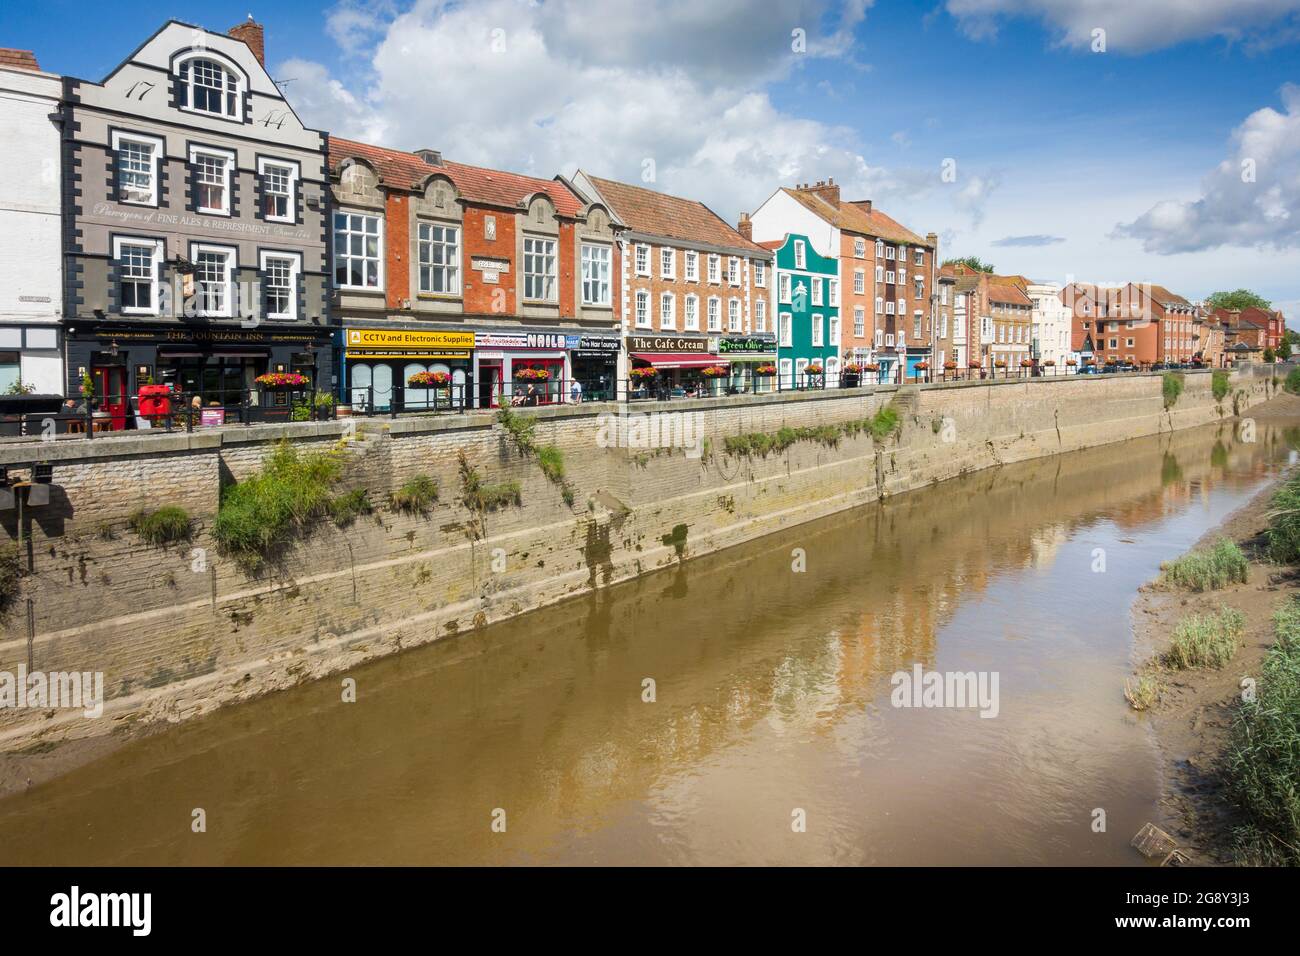 Bridgwater, Somerset, UK. Shops and restaurants on West Quay overlooking the River Parrett. Stock Photo